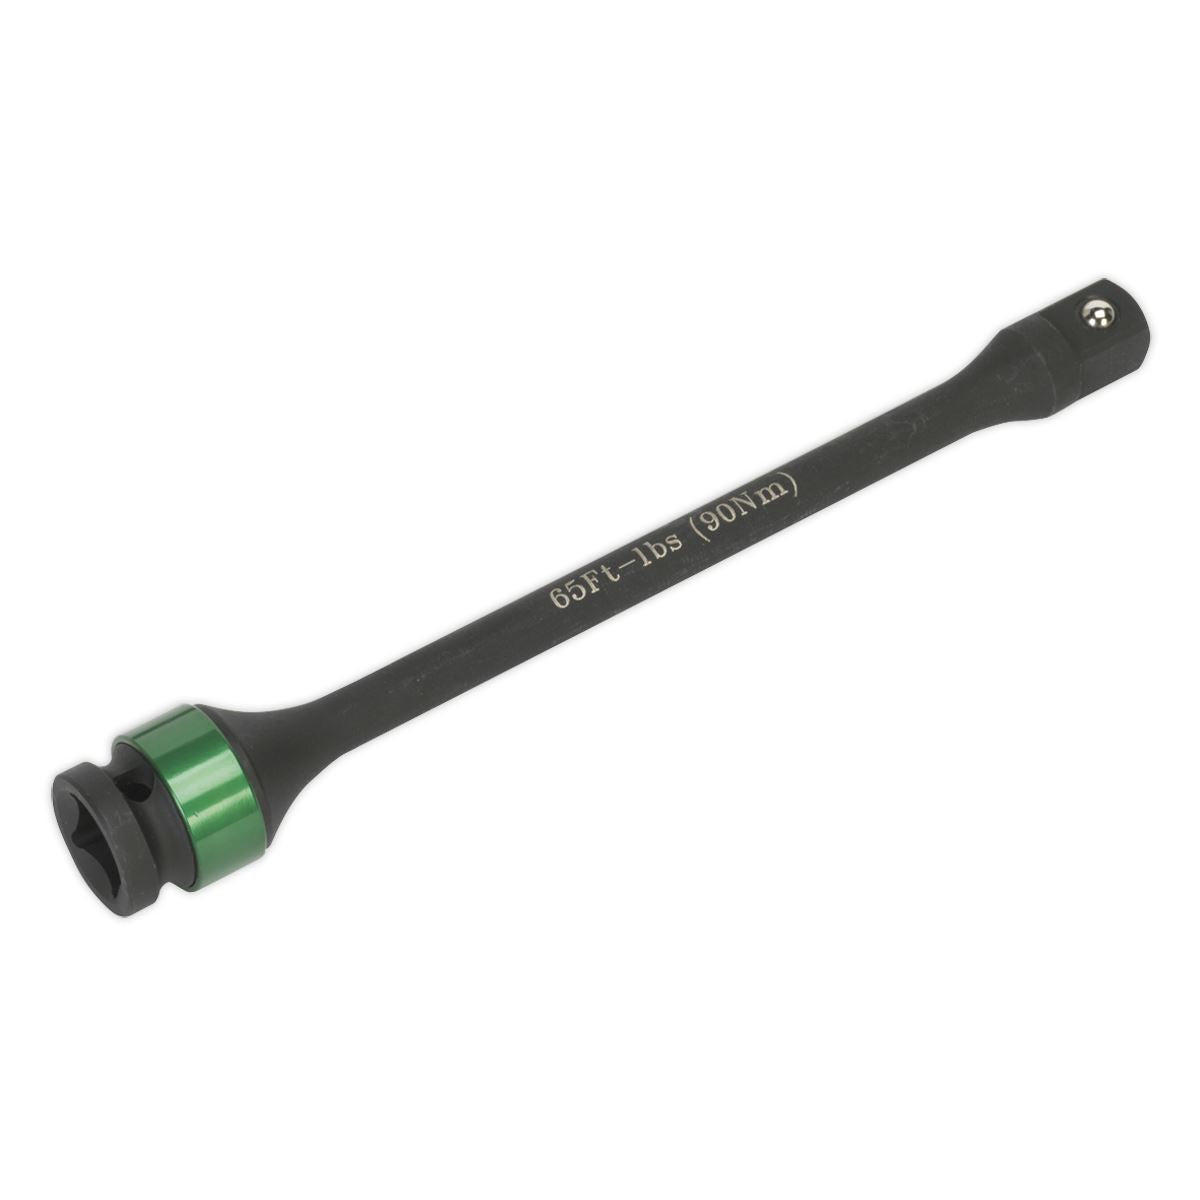 Sealey Torque Stick 1/2" Drive 90Nm